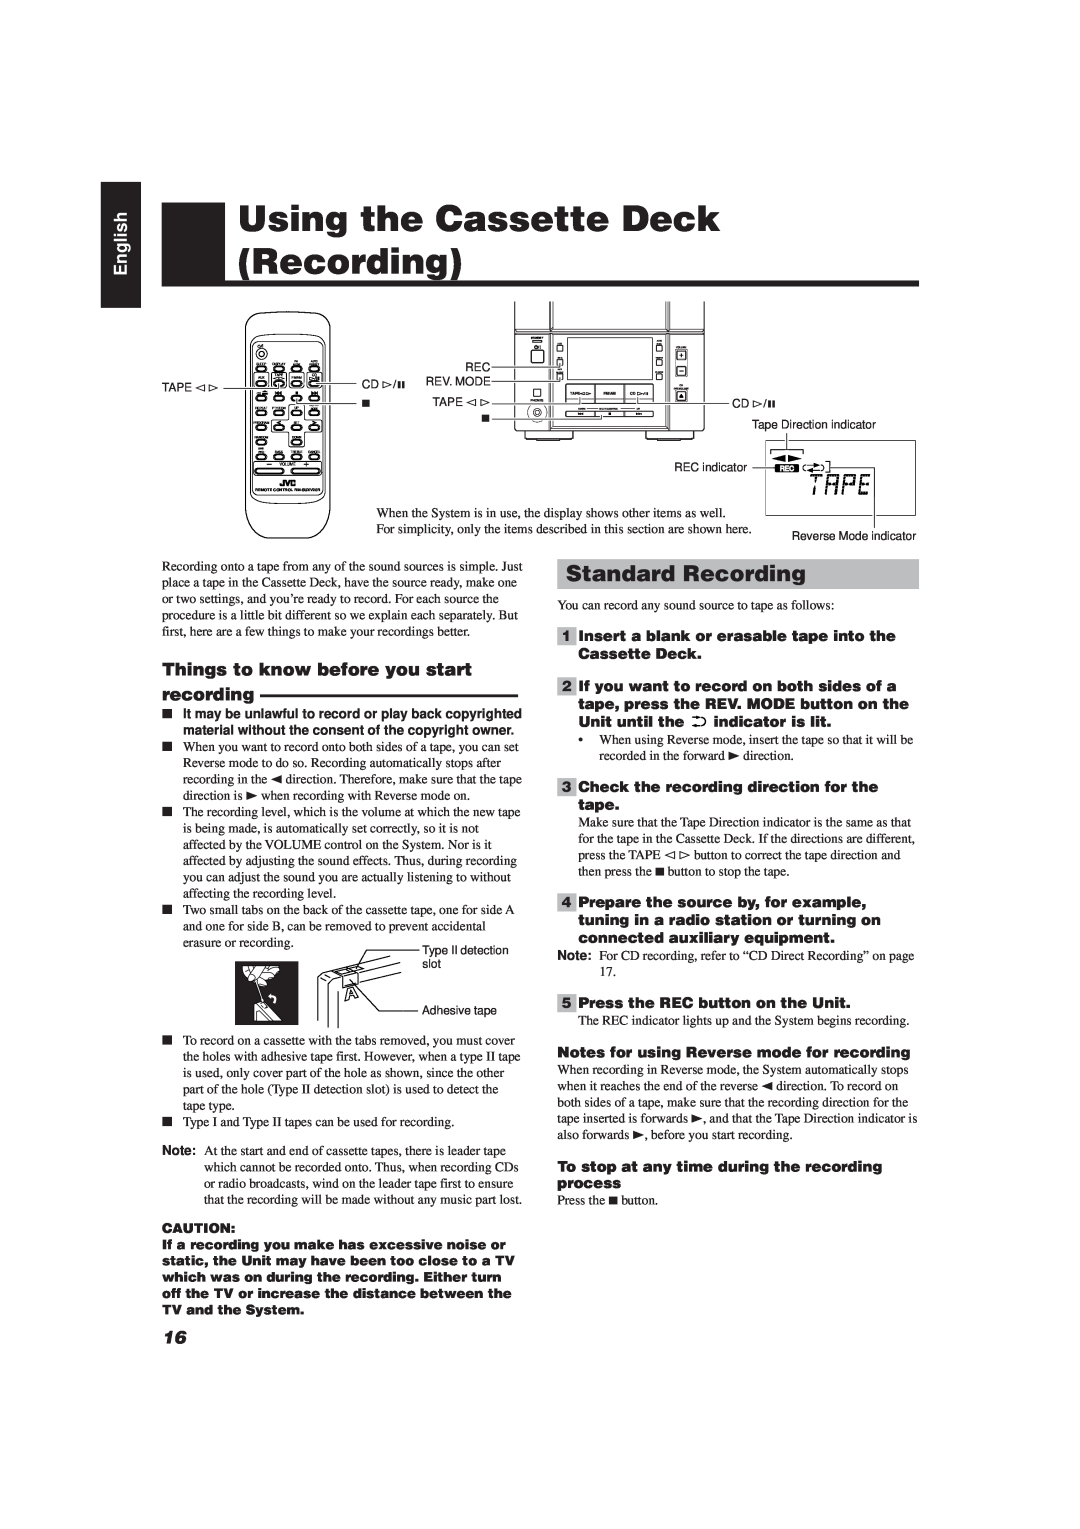 JVC UX-V20R, UX-V10 manual Using the Cassette Deck Recording, Standard Recording, English 